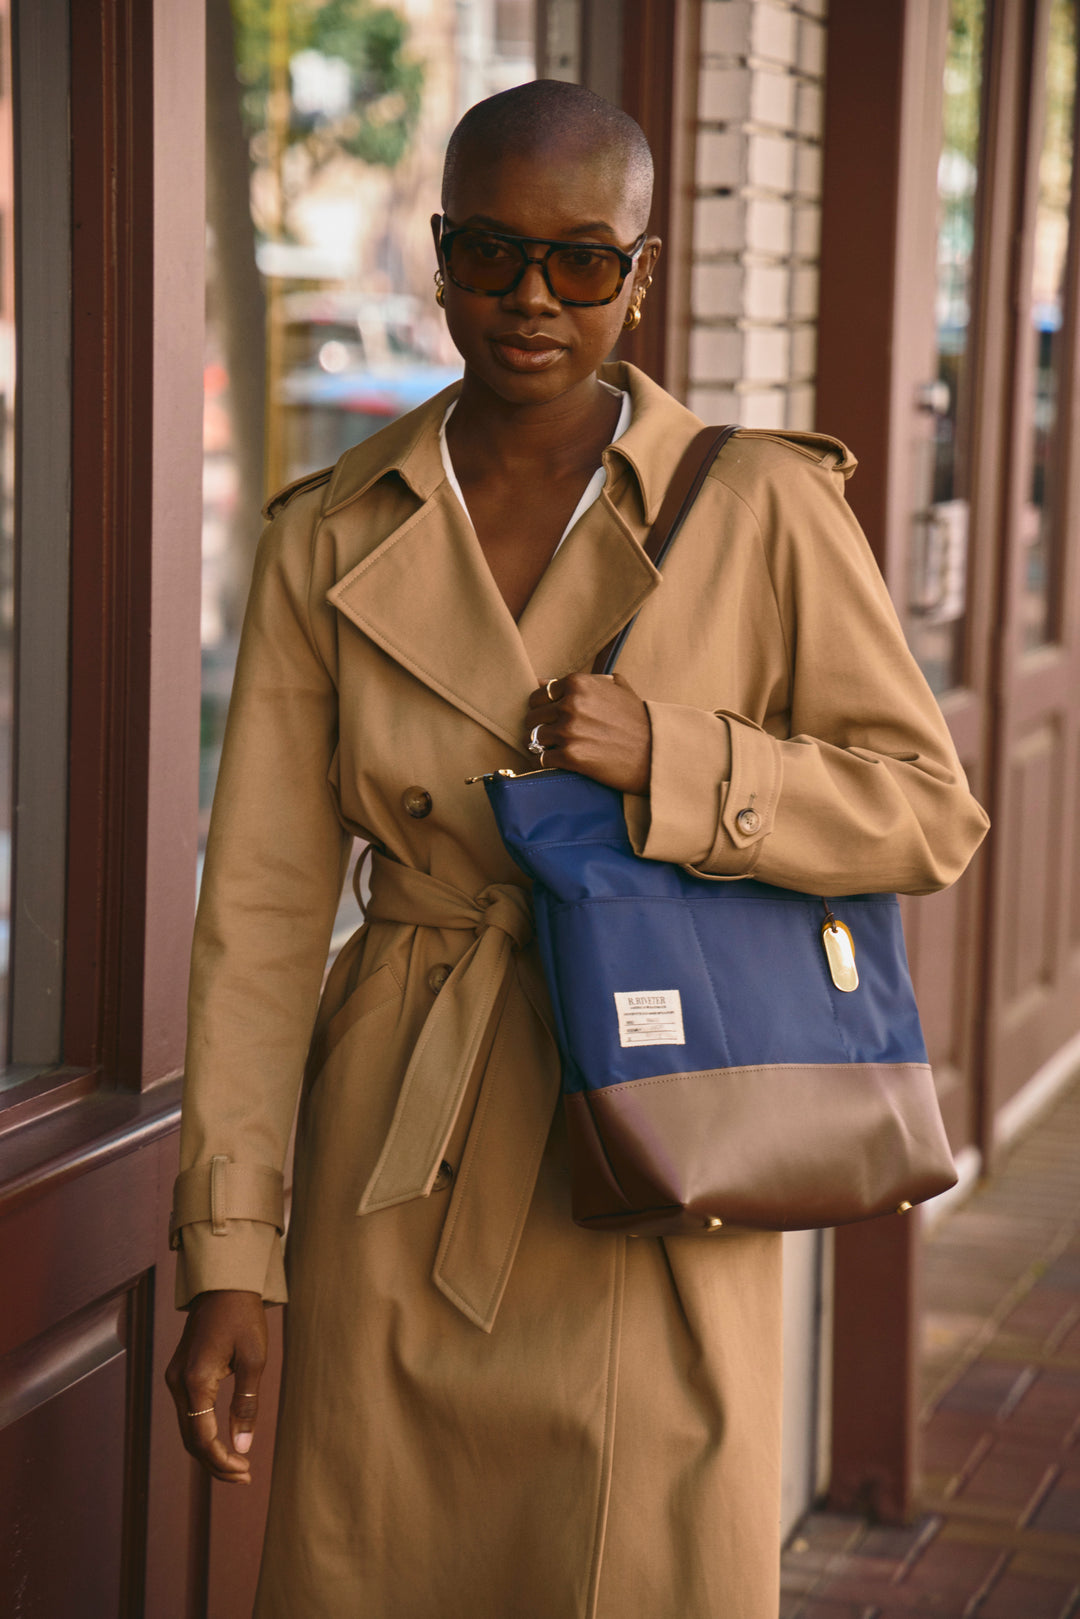 Harriet | Navy Nylon + Brown Leather